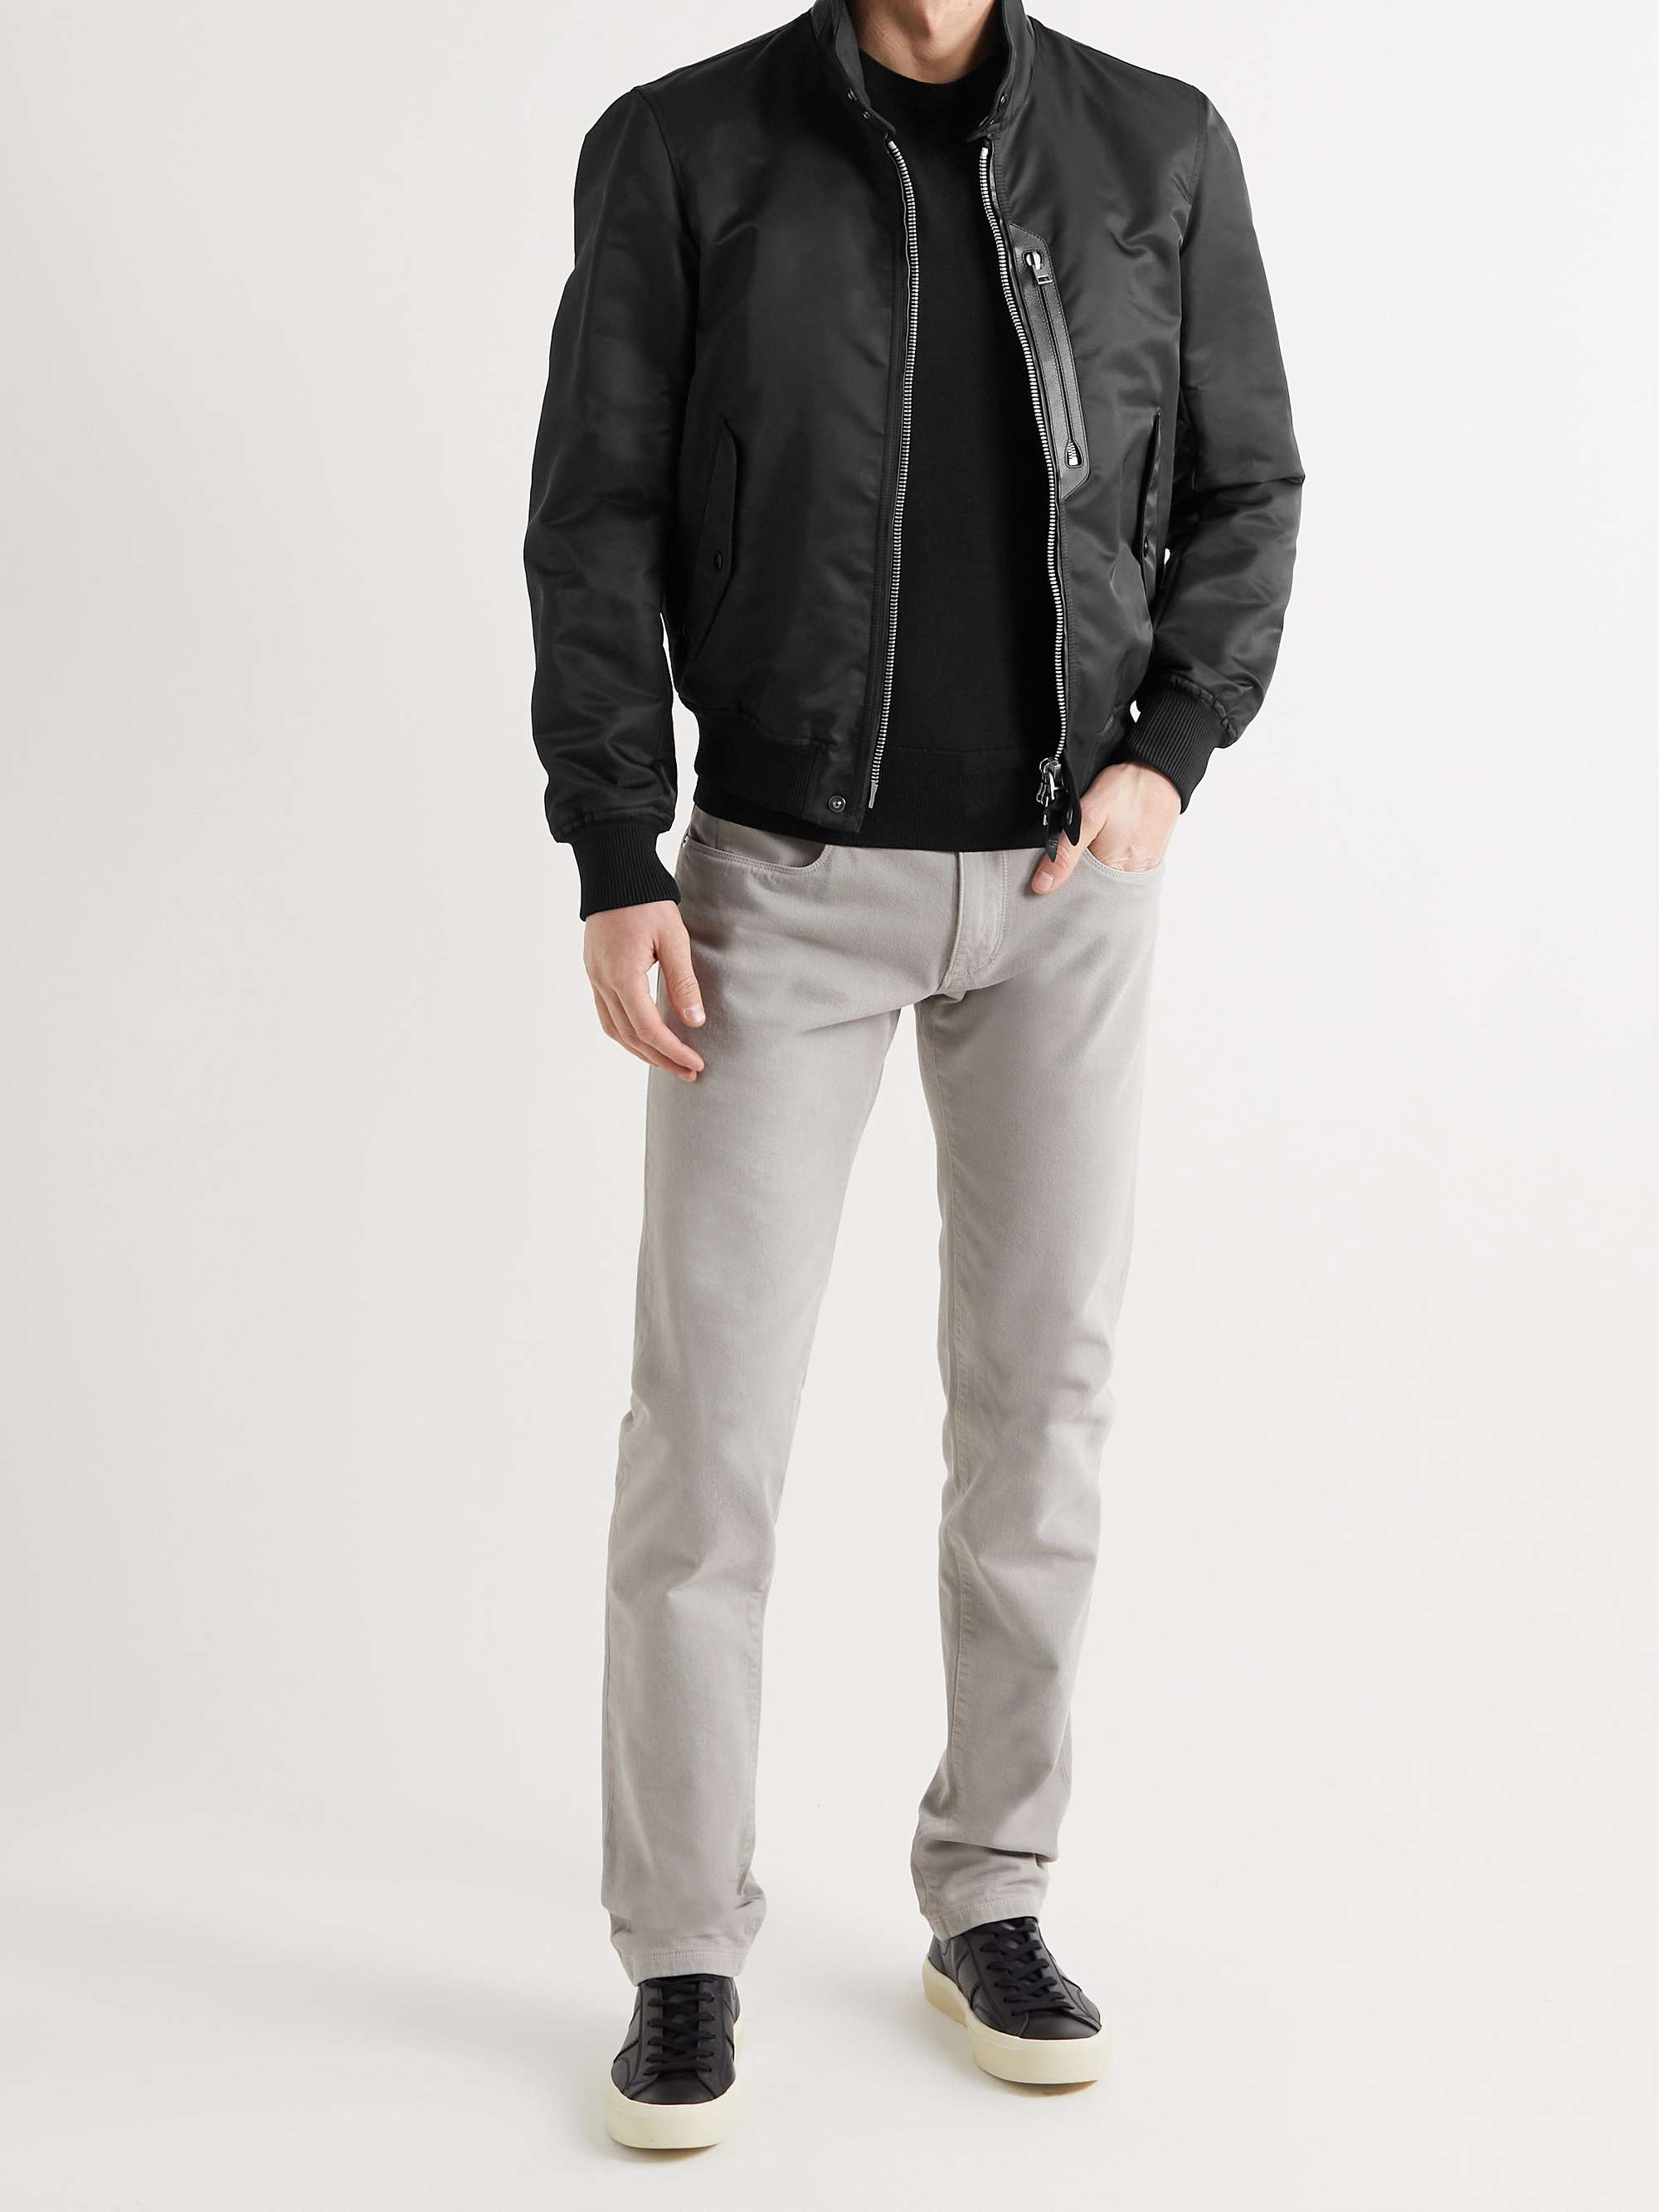 TOM FORD Leather-Trimmed Nylon Harrington Jacket